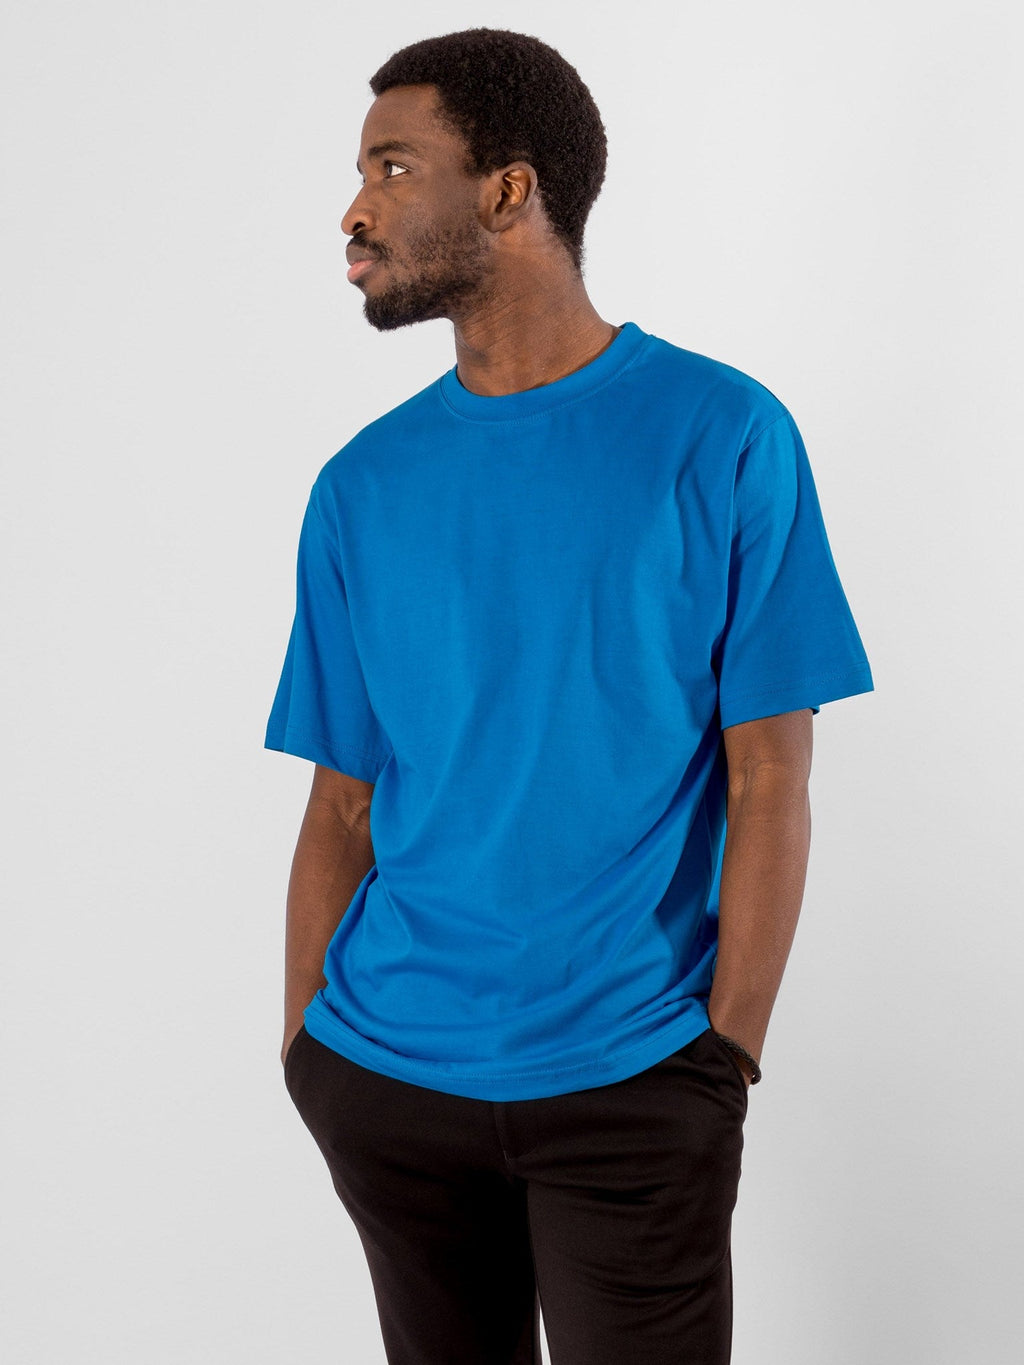 Camiseta de gran tamaño - Azul turquesa